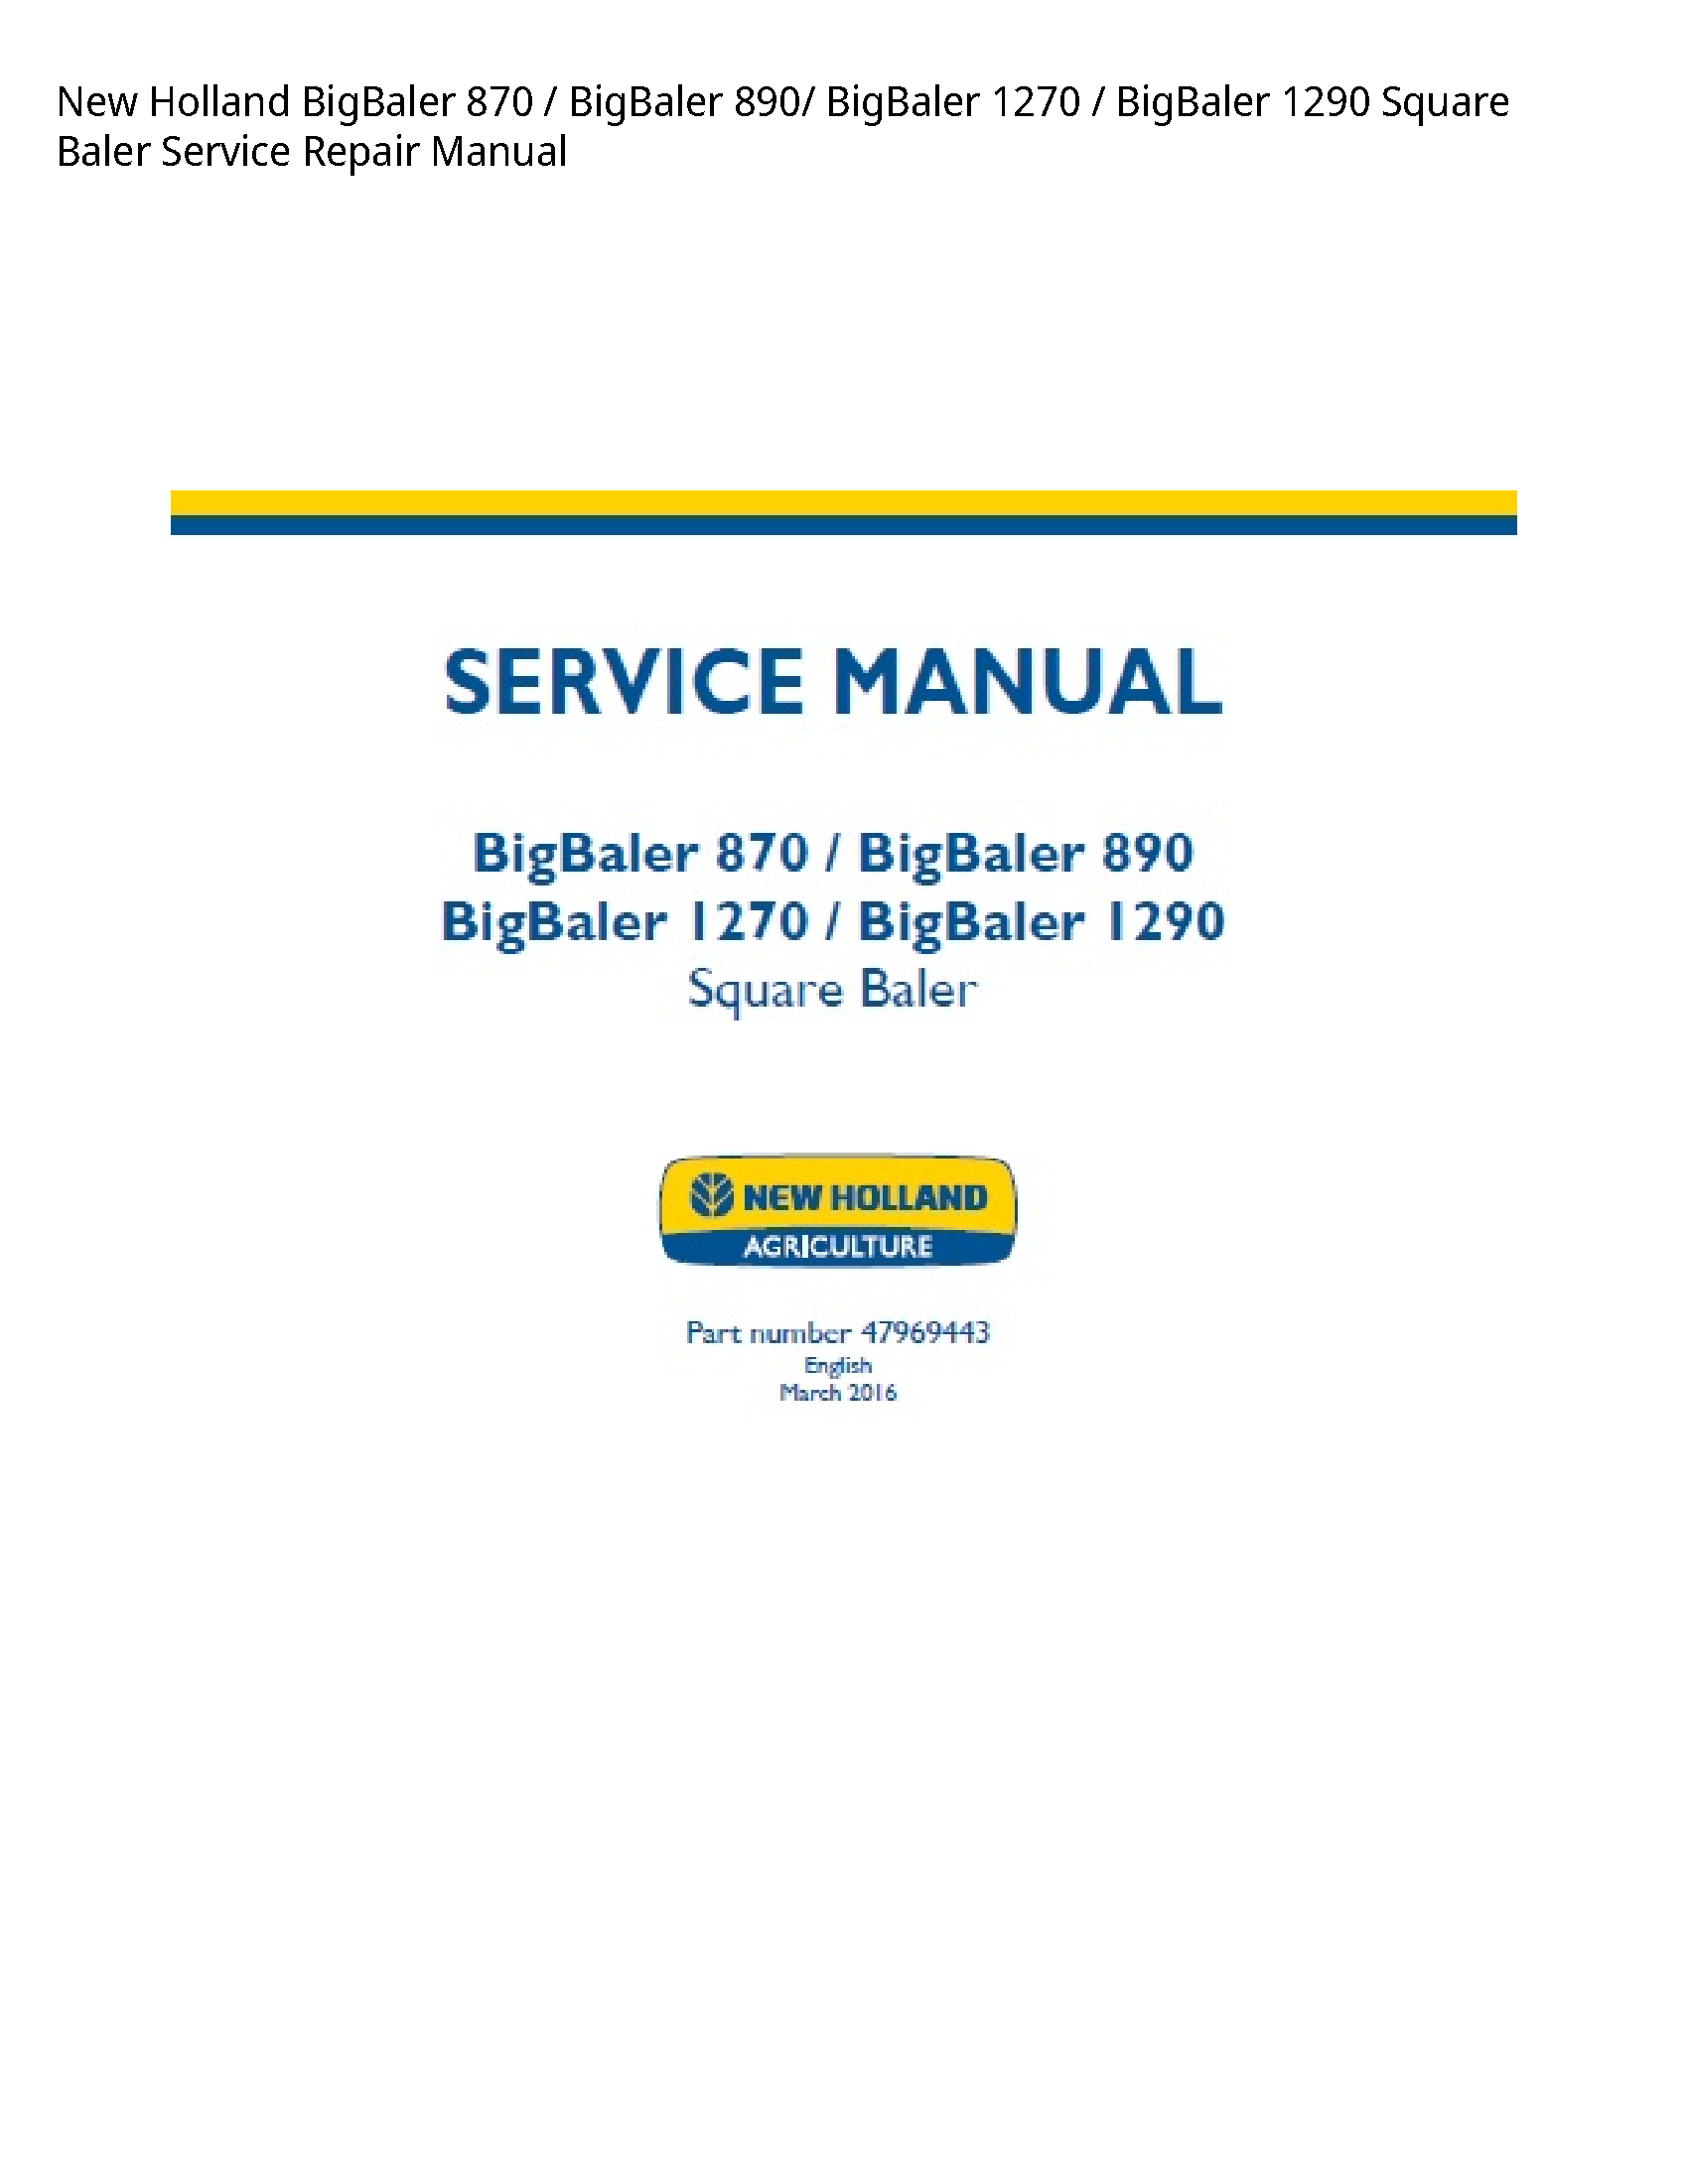 New Holland 870 BigBaler BigBaler BigBaler BigBaler Square Baler manual